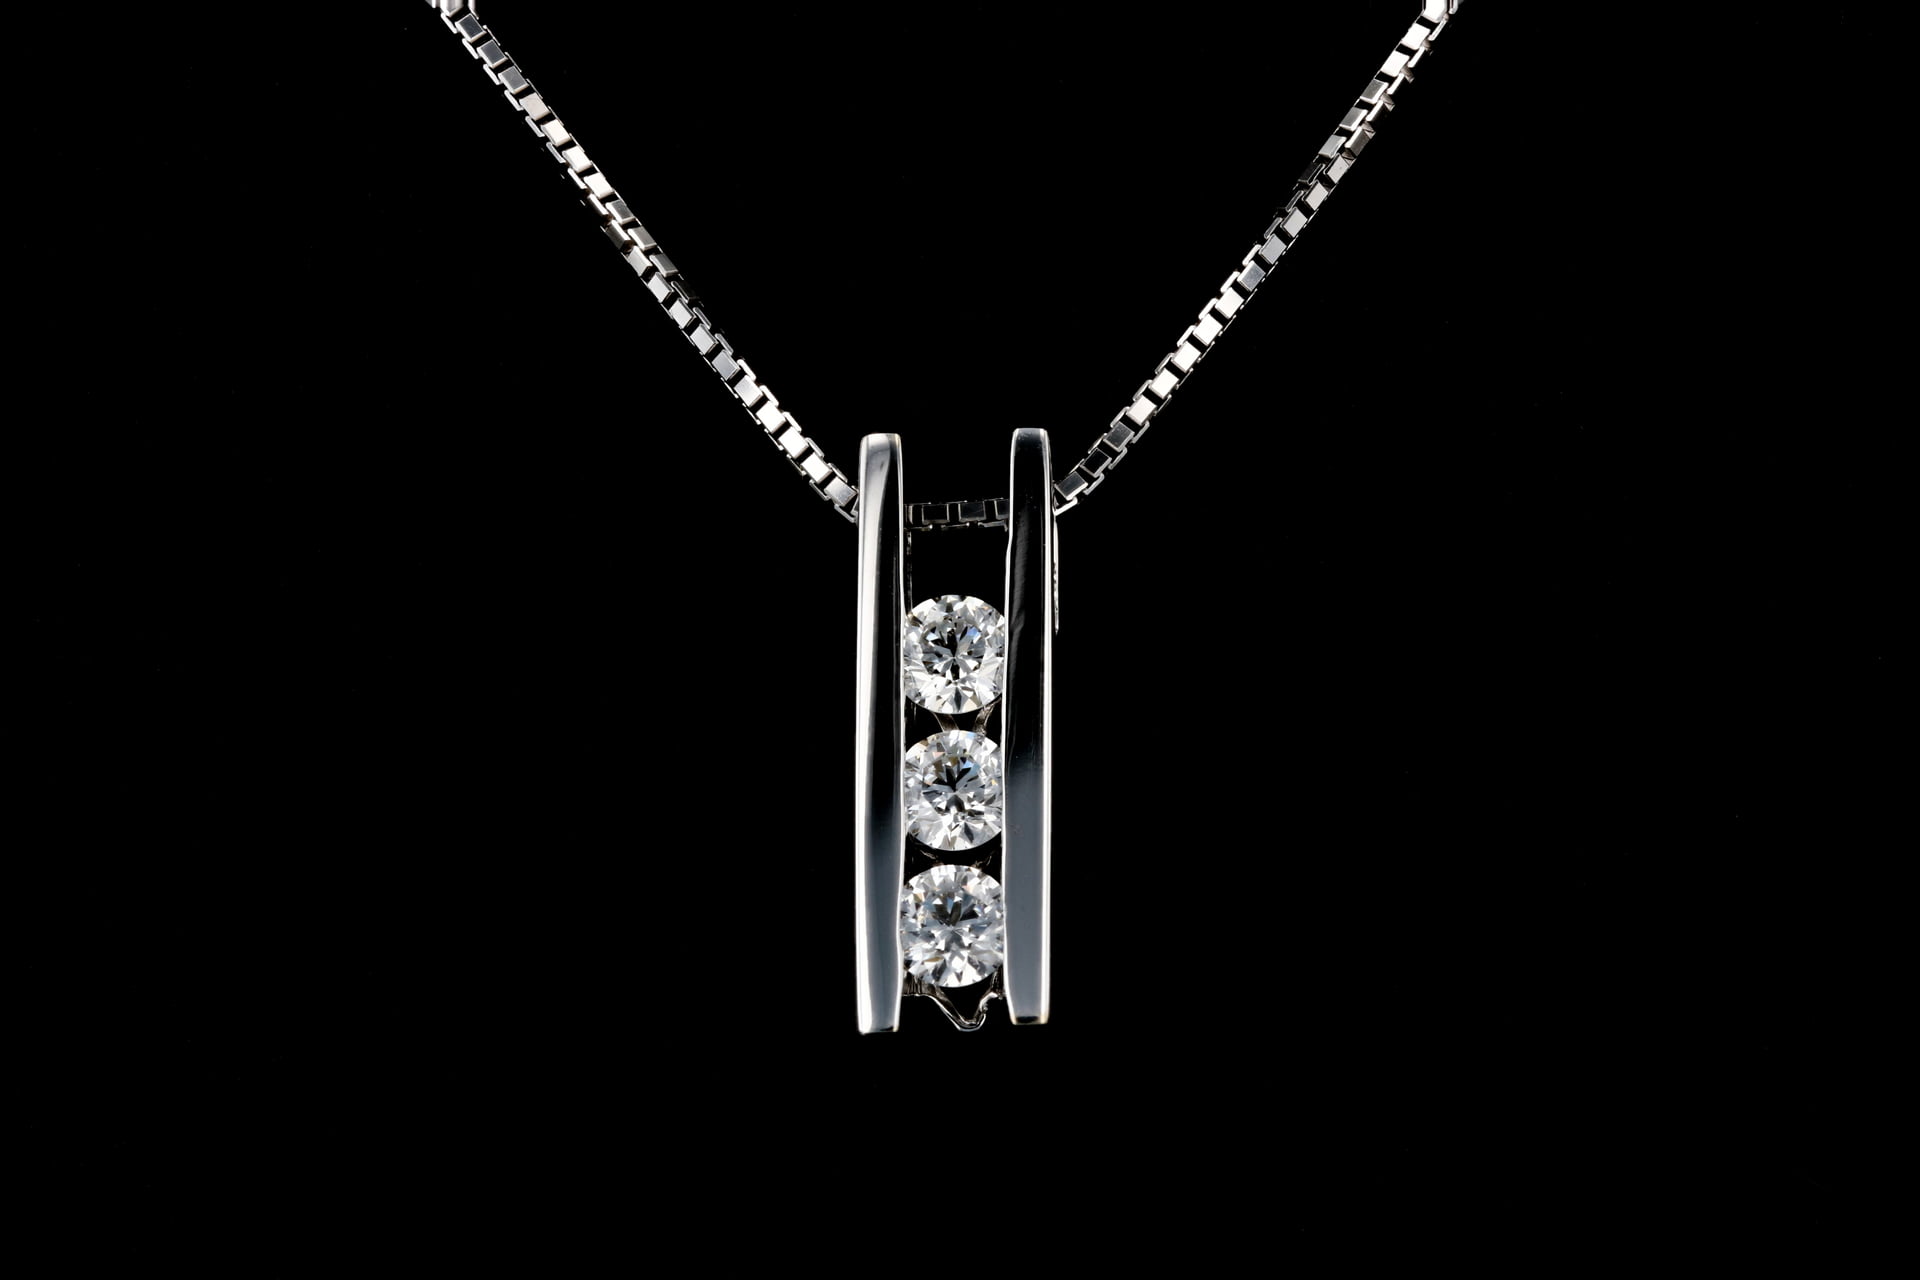 Medium Diamond Pendant Necklace in Yellow, Rose or White Gold